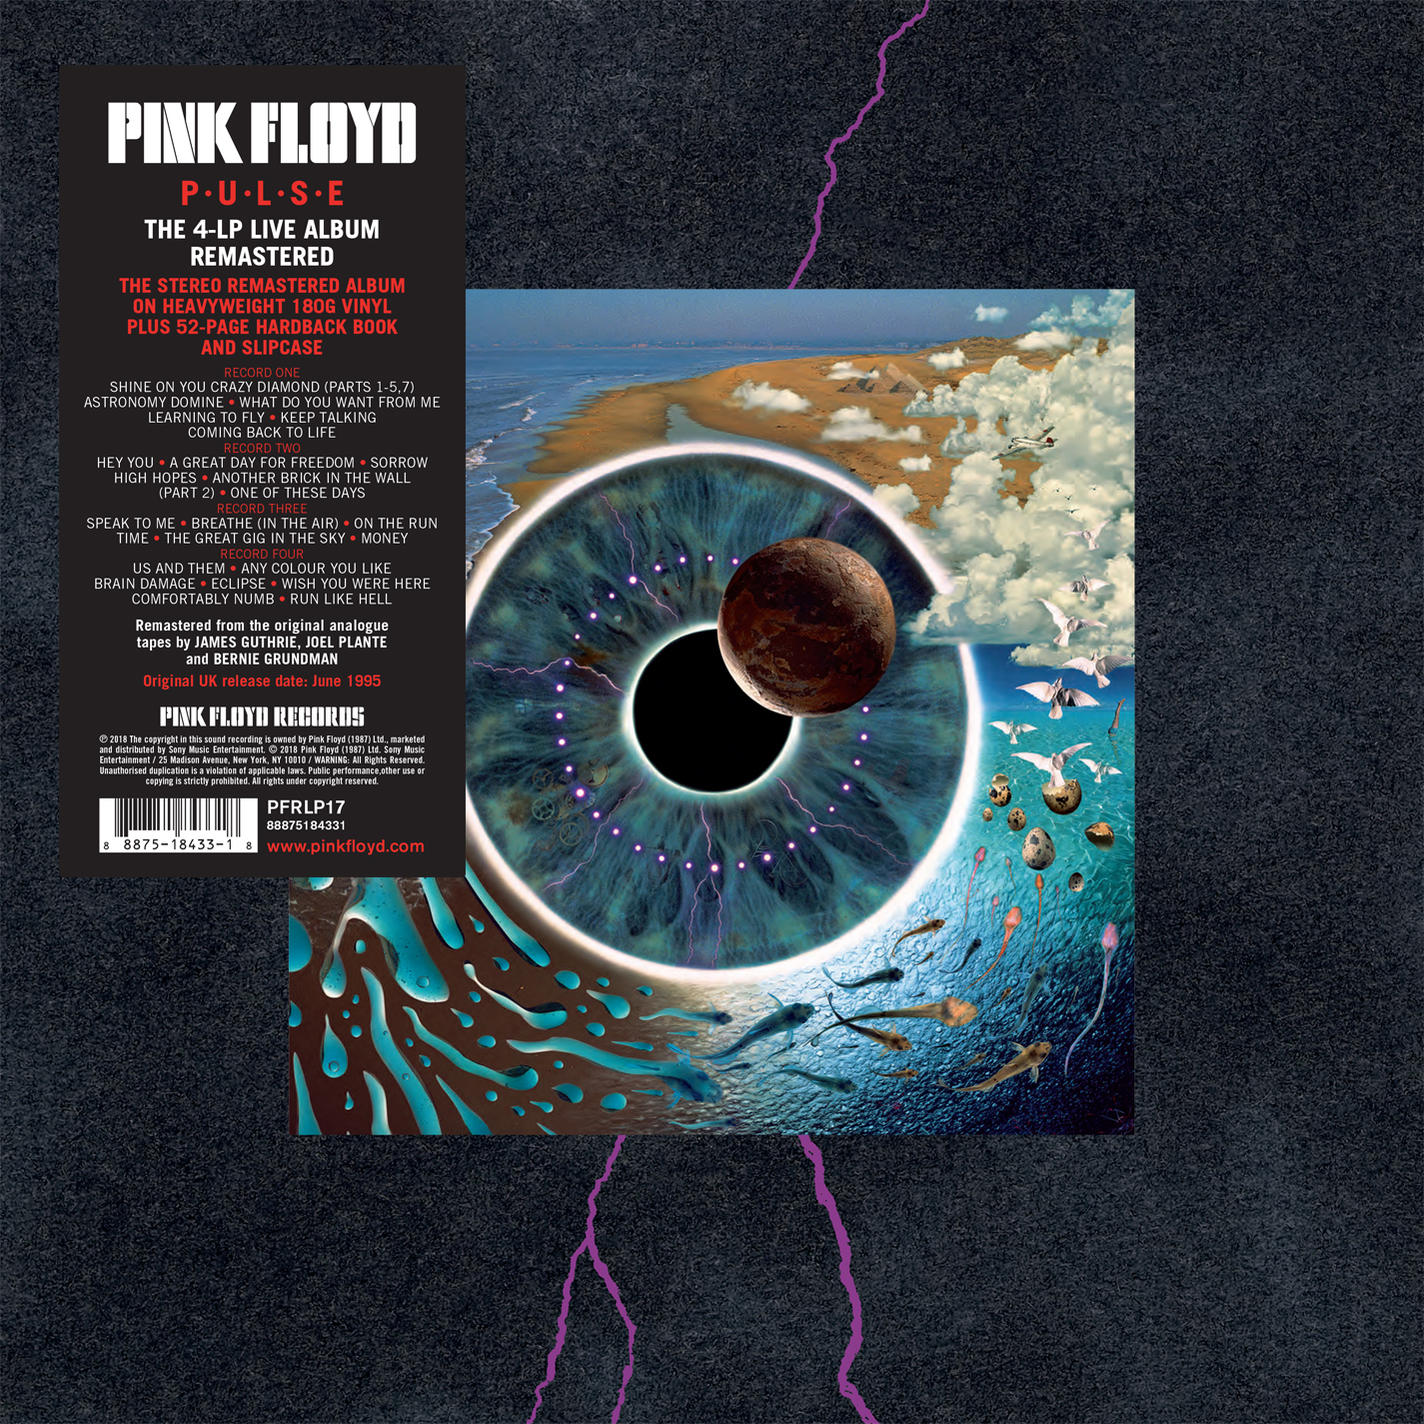 (Vinyl) - - Floyd Pink Pulse